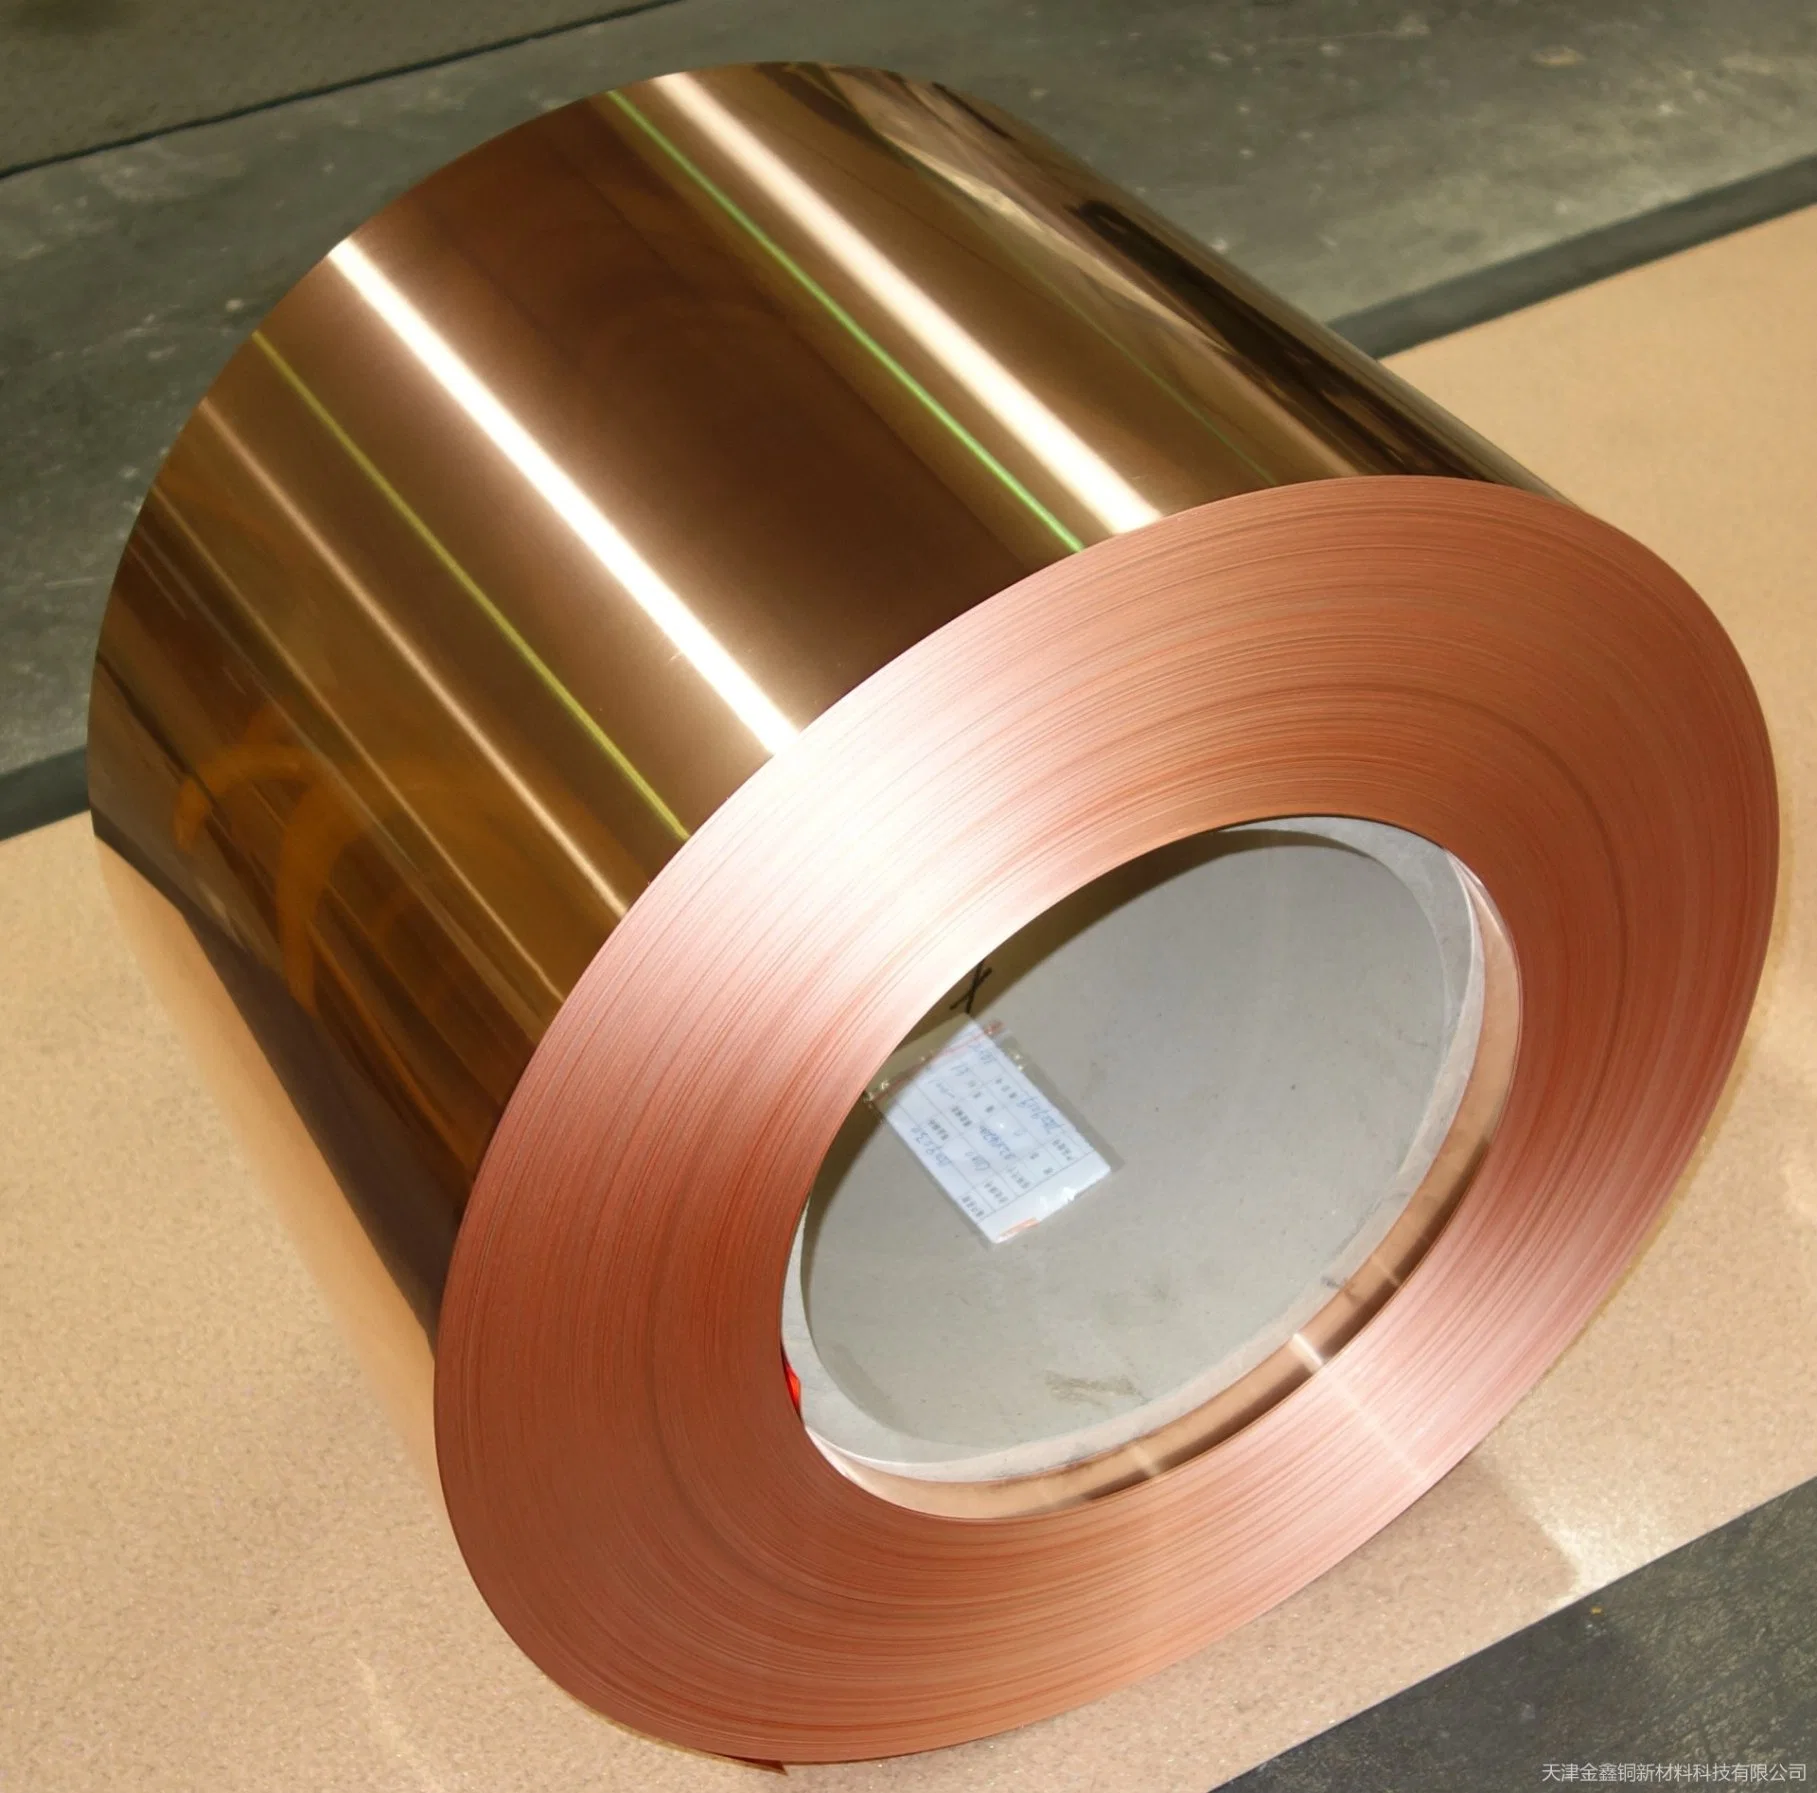 C1100 C1200 C1020 C5191 Phosphor Bronze Decorative Earthing Copper Coil Wire Foil Roll 99.9% Pure Copper Strip